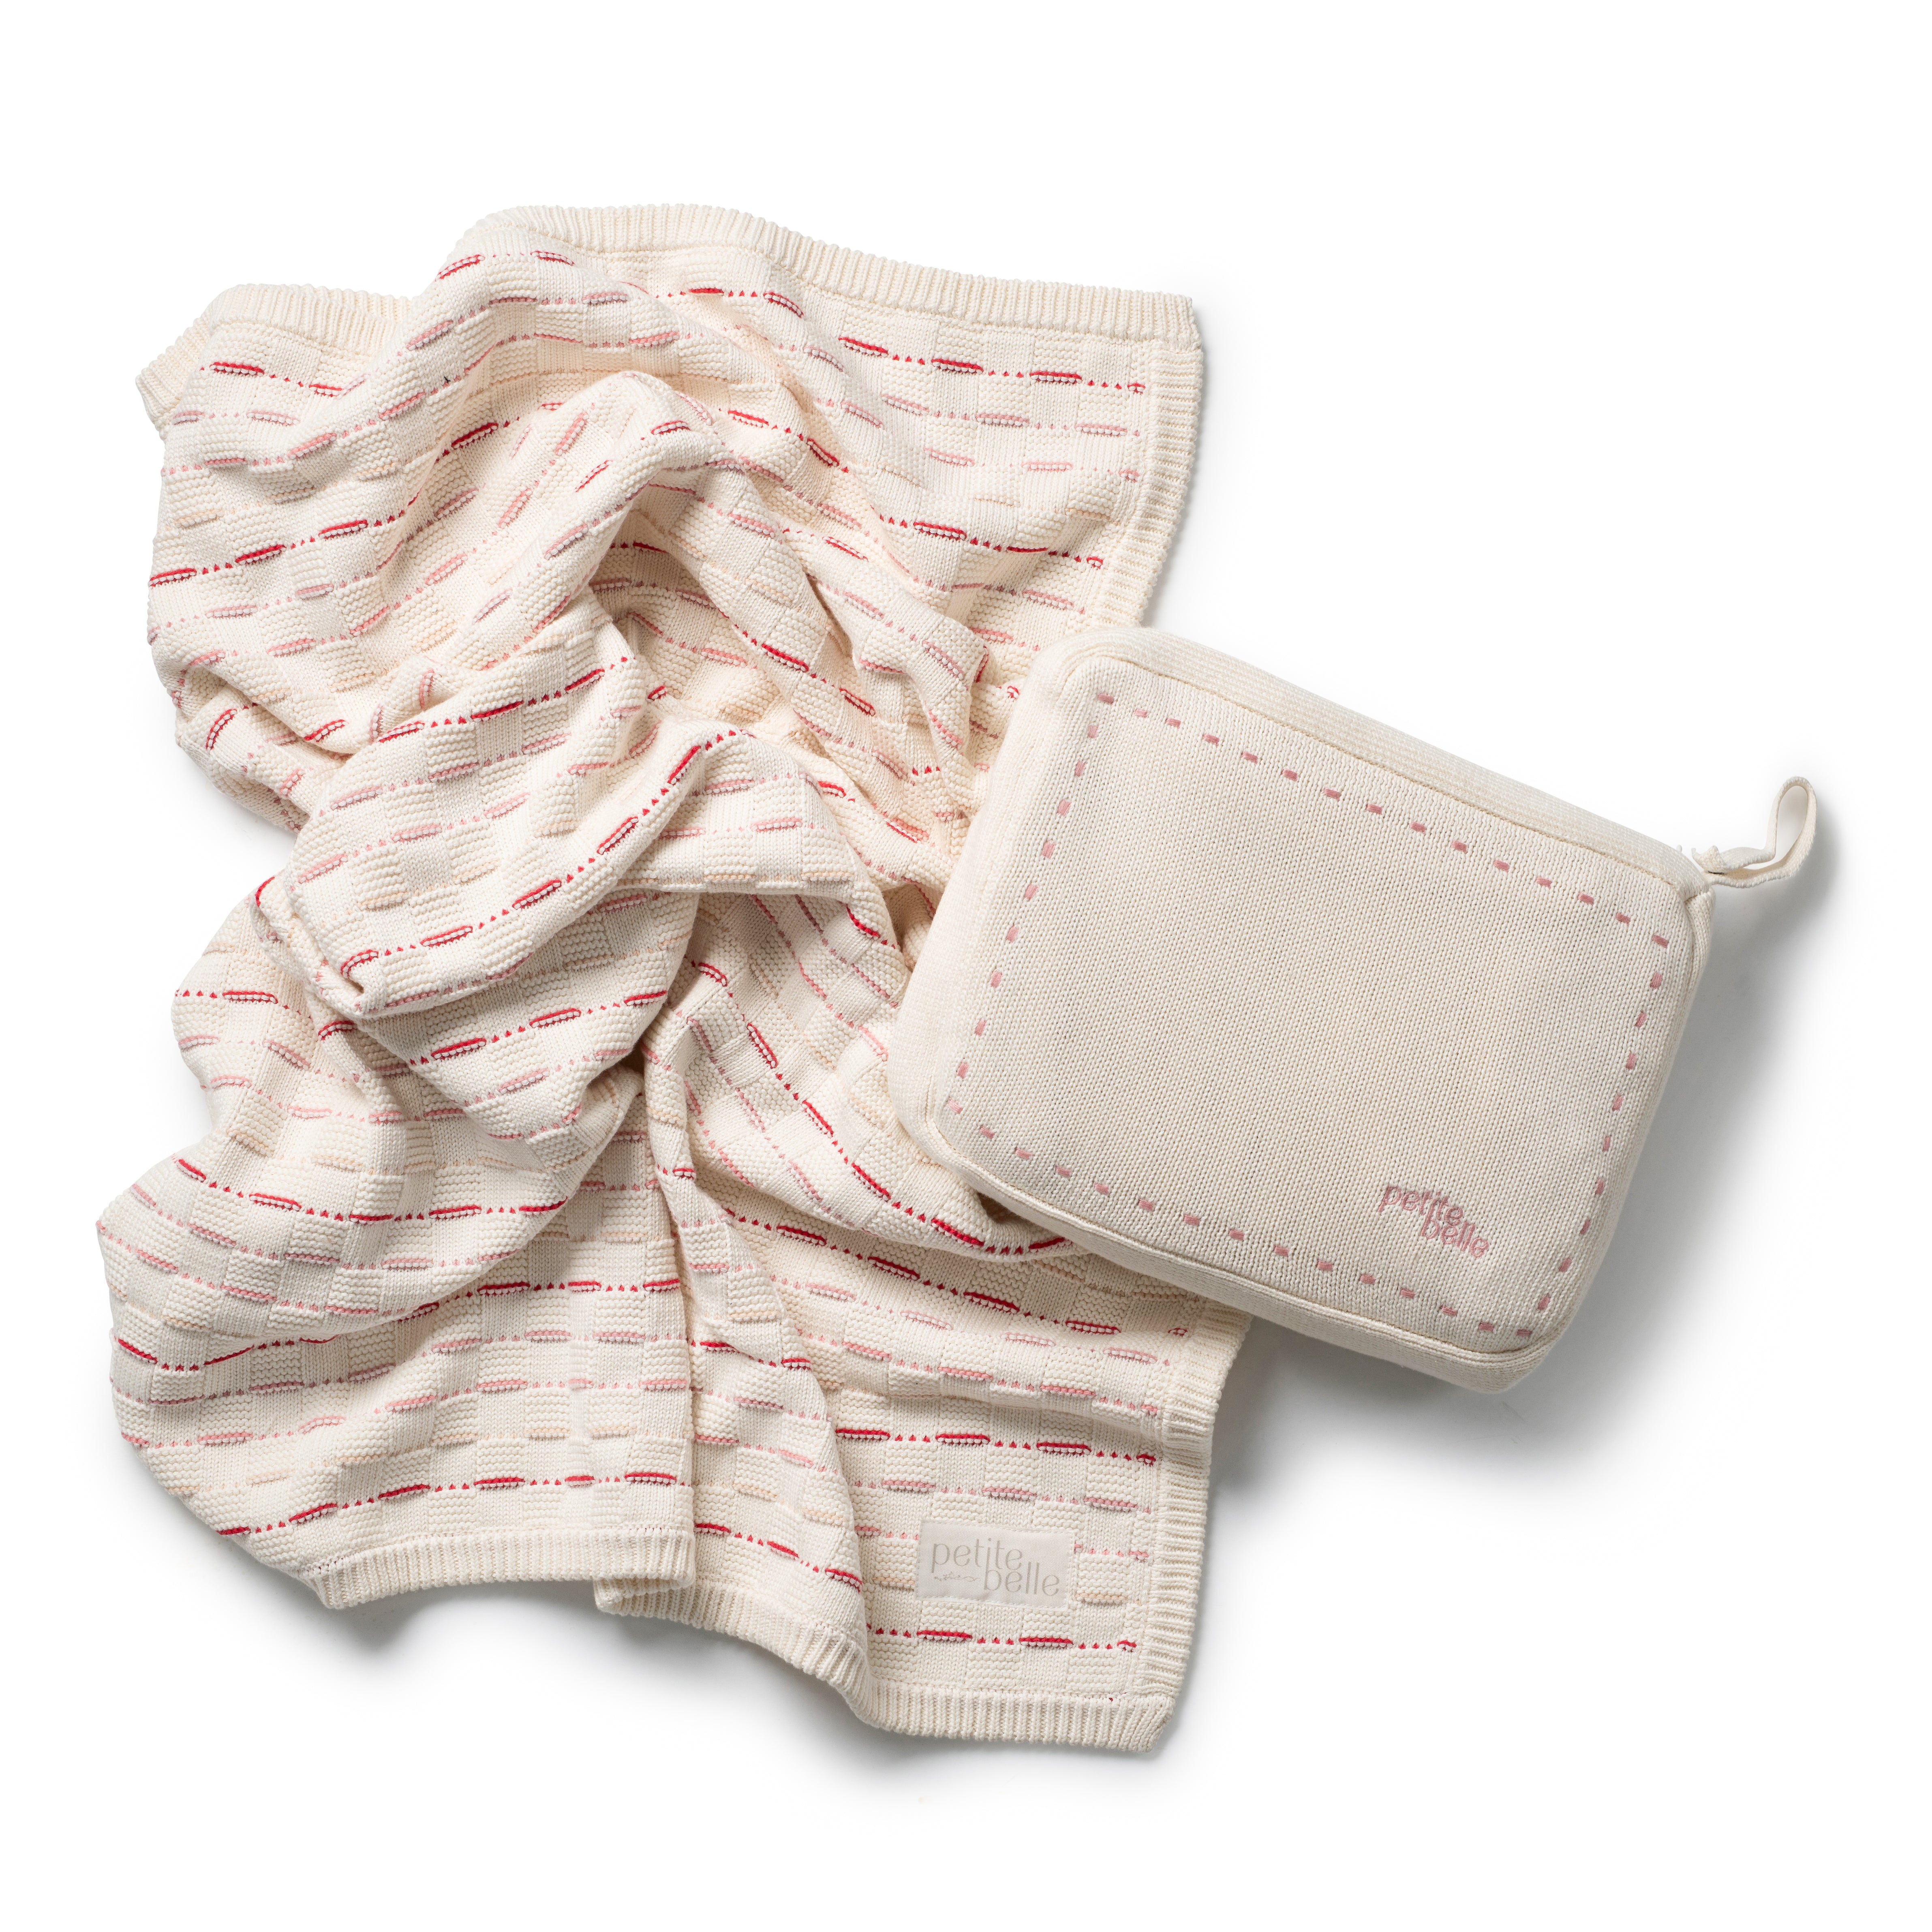 Petite Belle Ruby Blush Weave Knit Blanket & Pouch Set